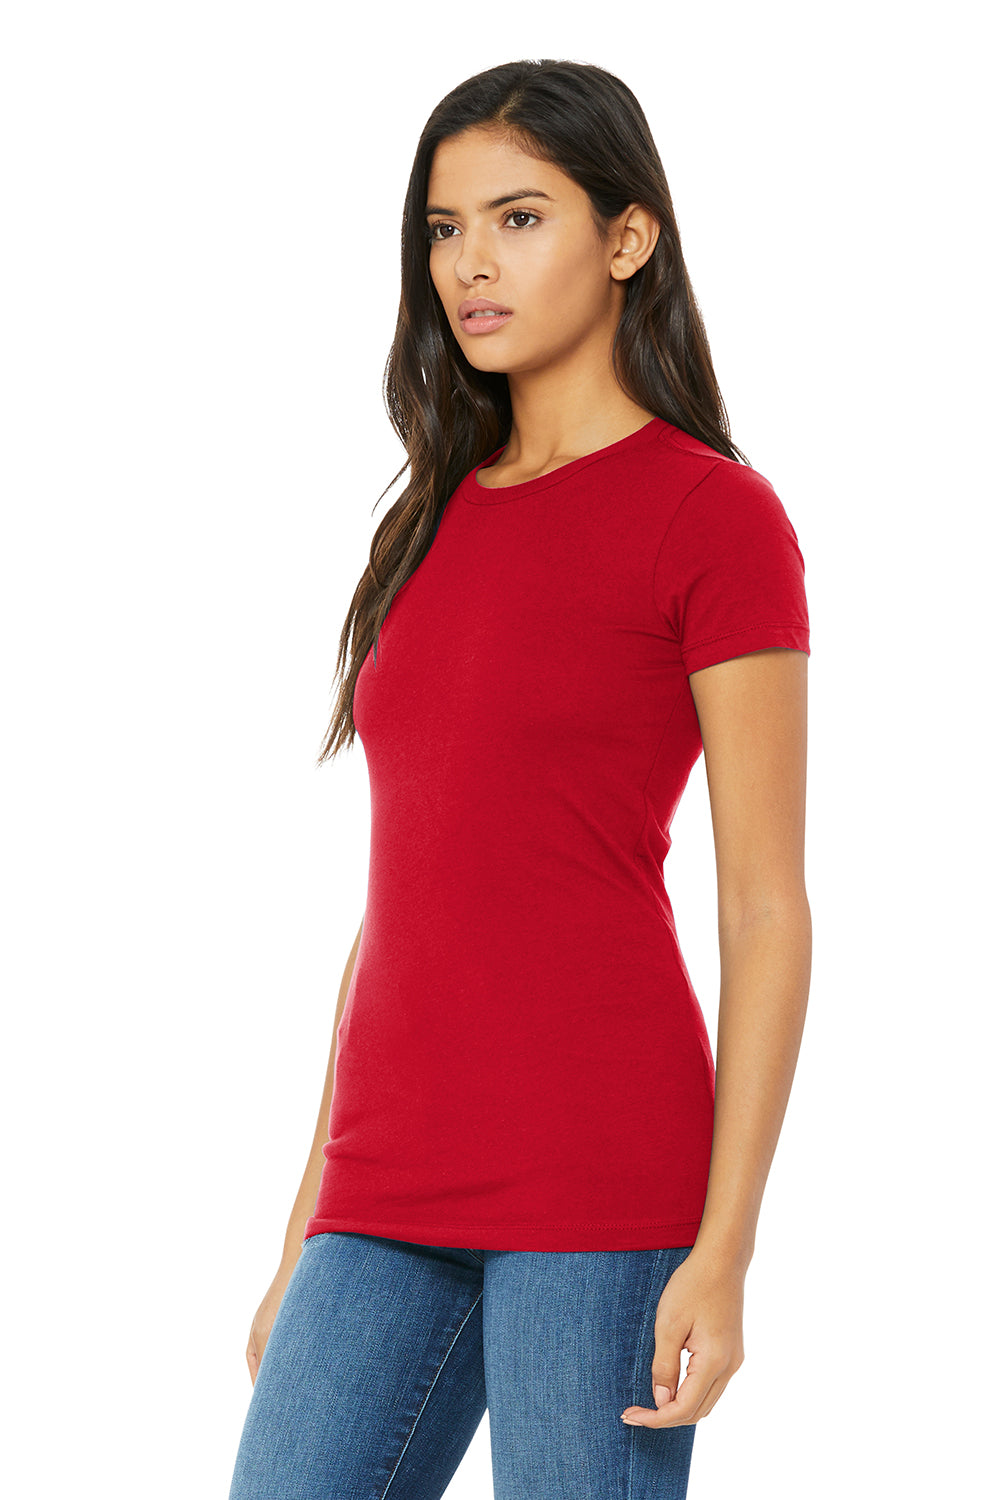 Bella + Canvas BC6004/6004 Womens The Favorite Short Sleeve Crewneck T-Shirt Red Model 3Q